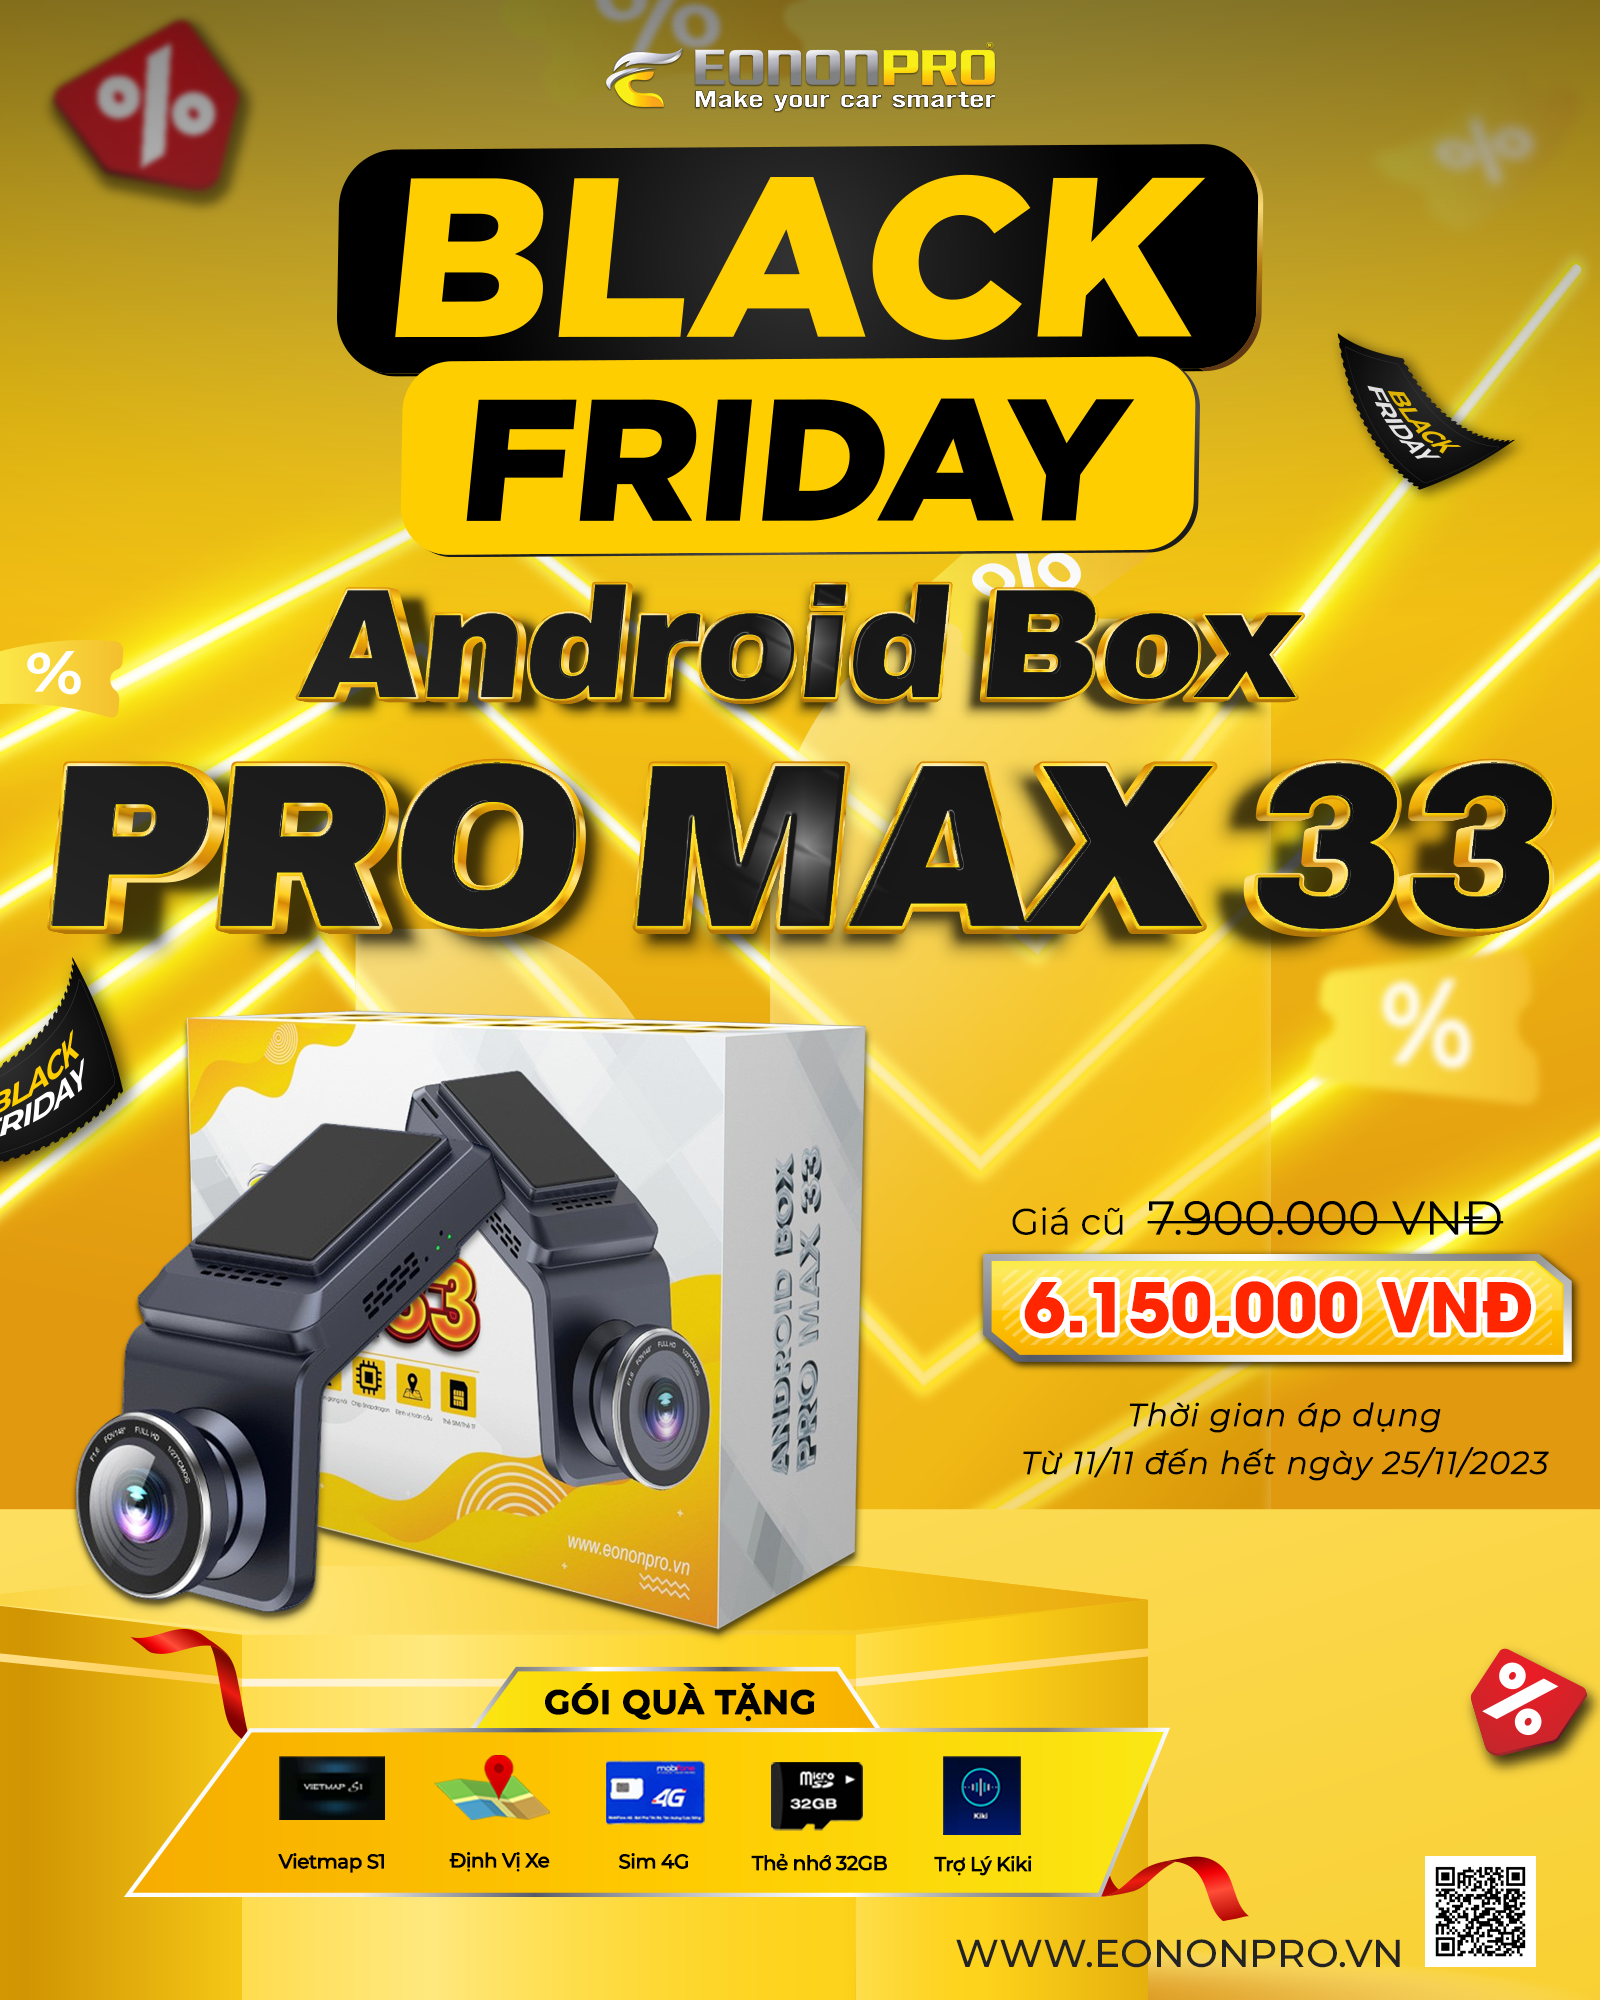 Android Box Pro Max 33